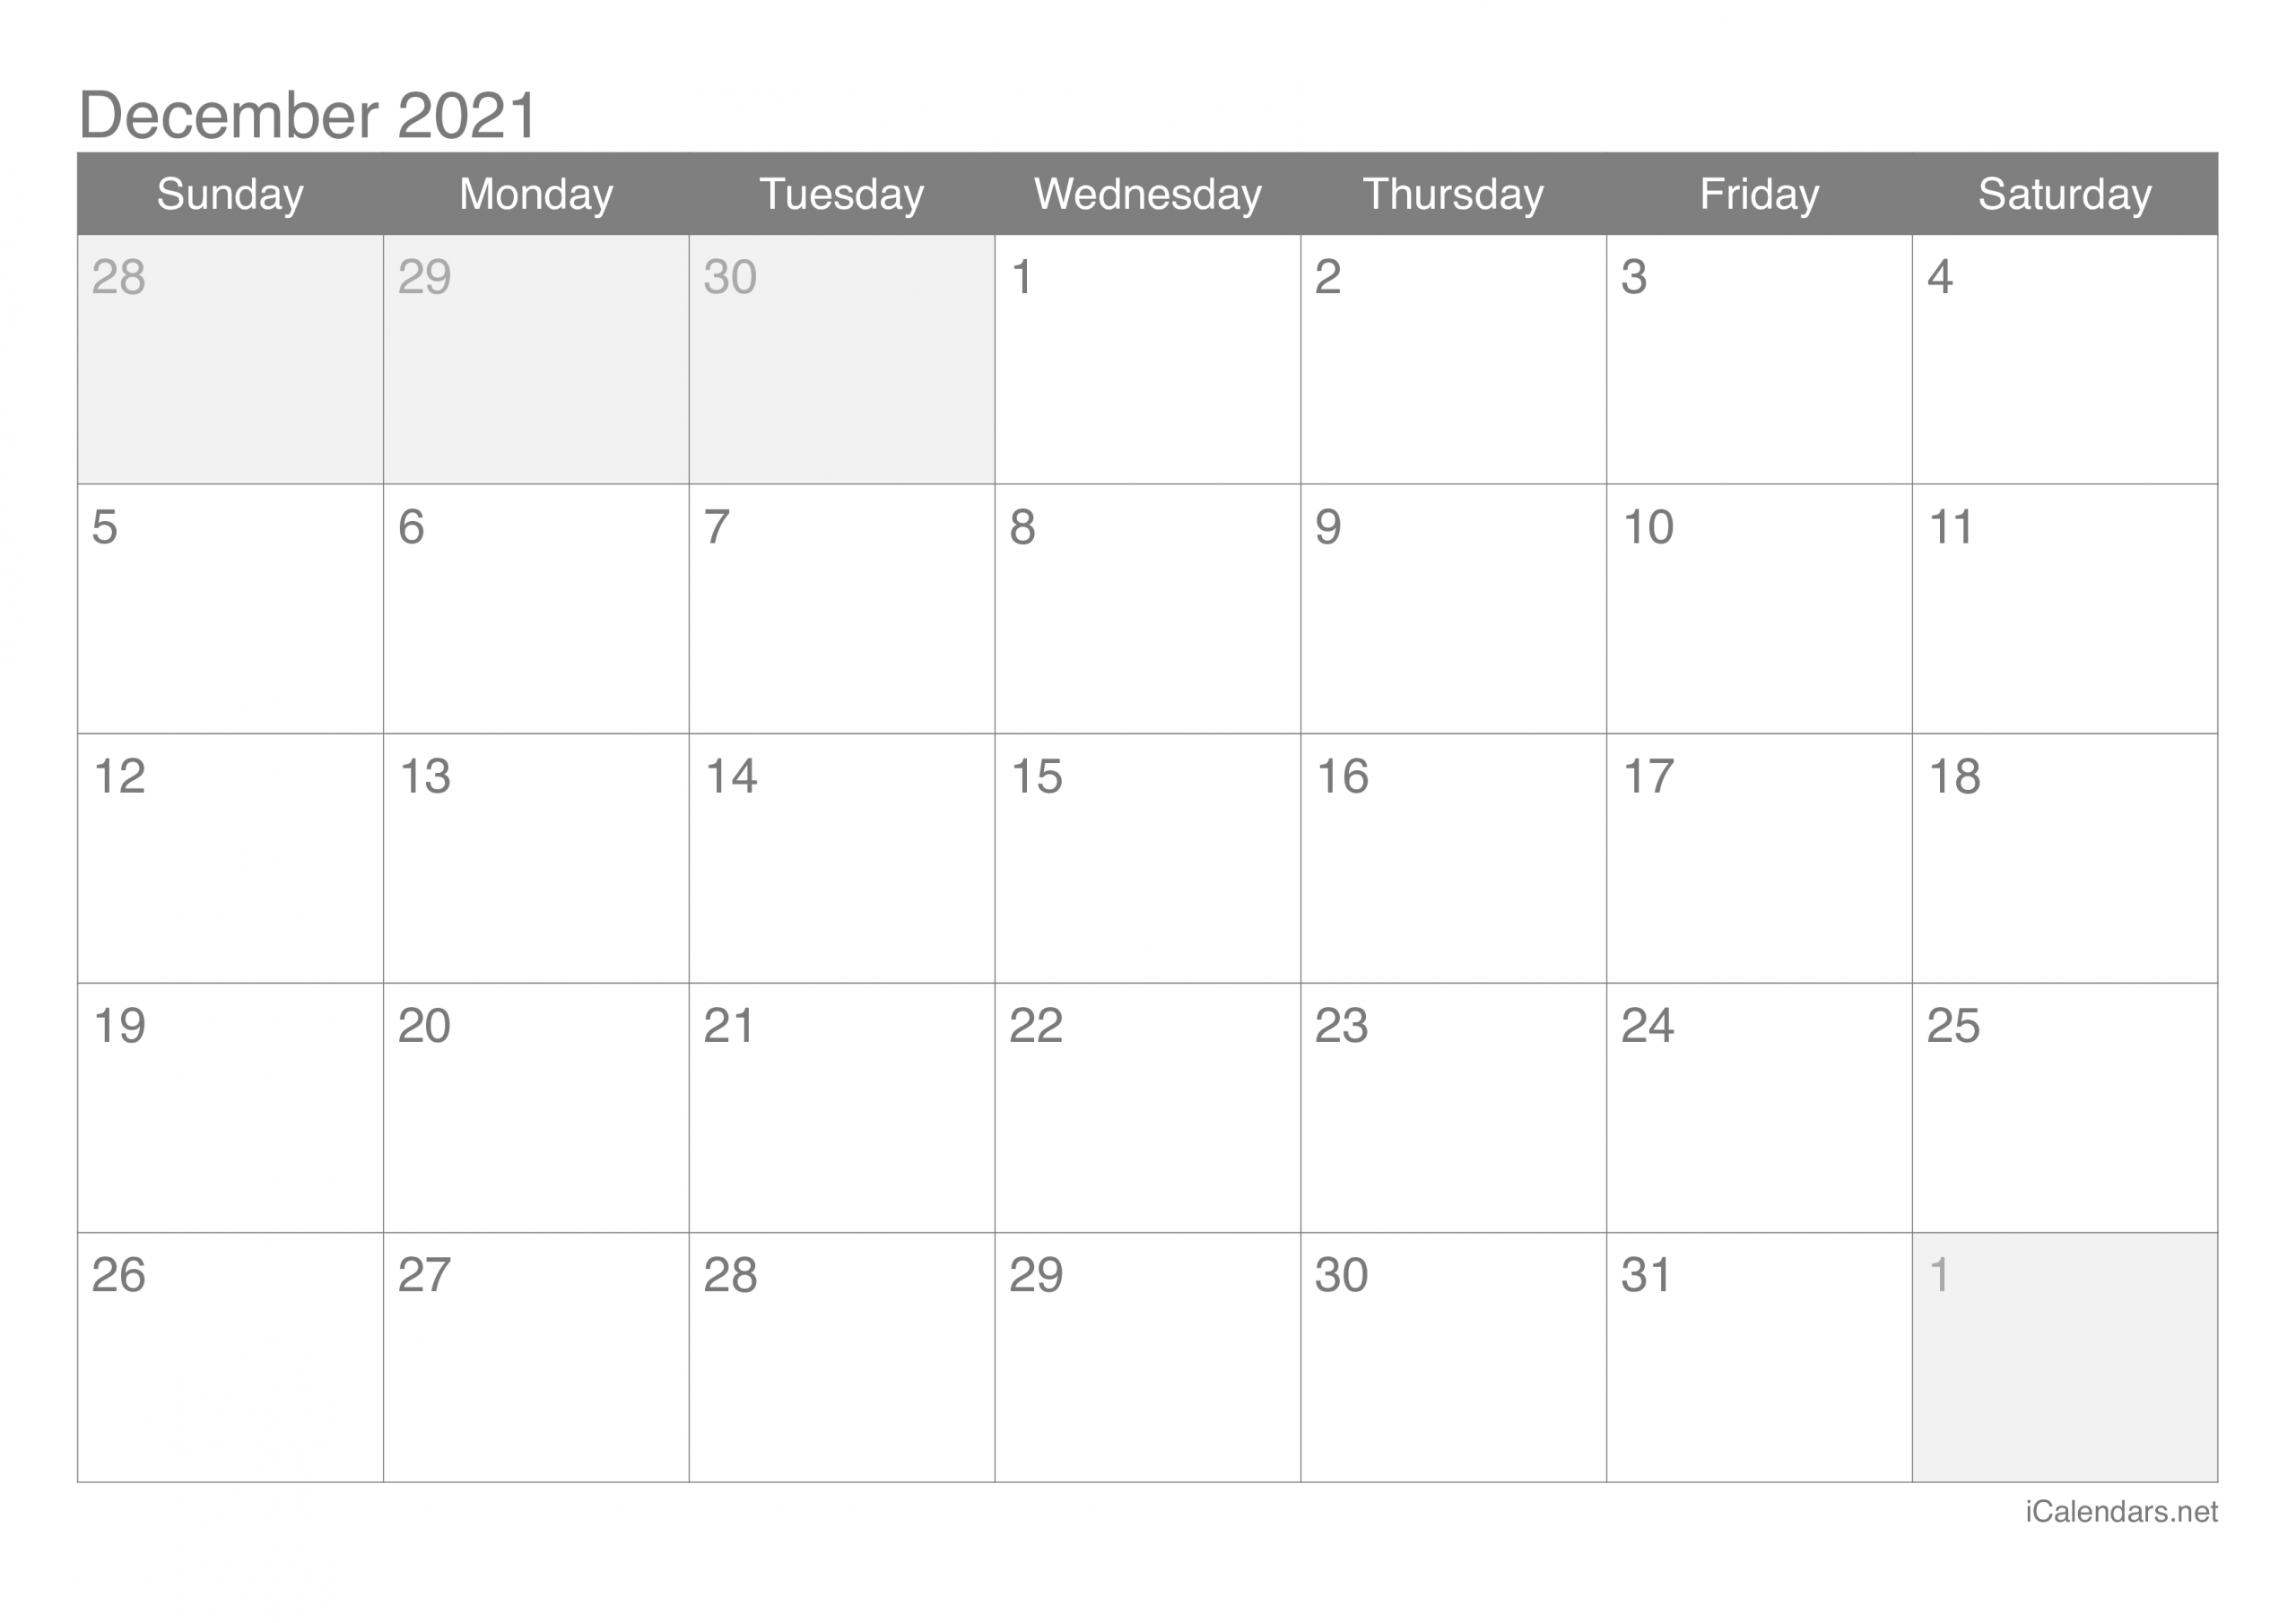 December 2021 Printable Calendar - Icalendars November December January 2021 Calendar